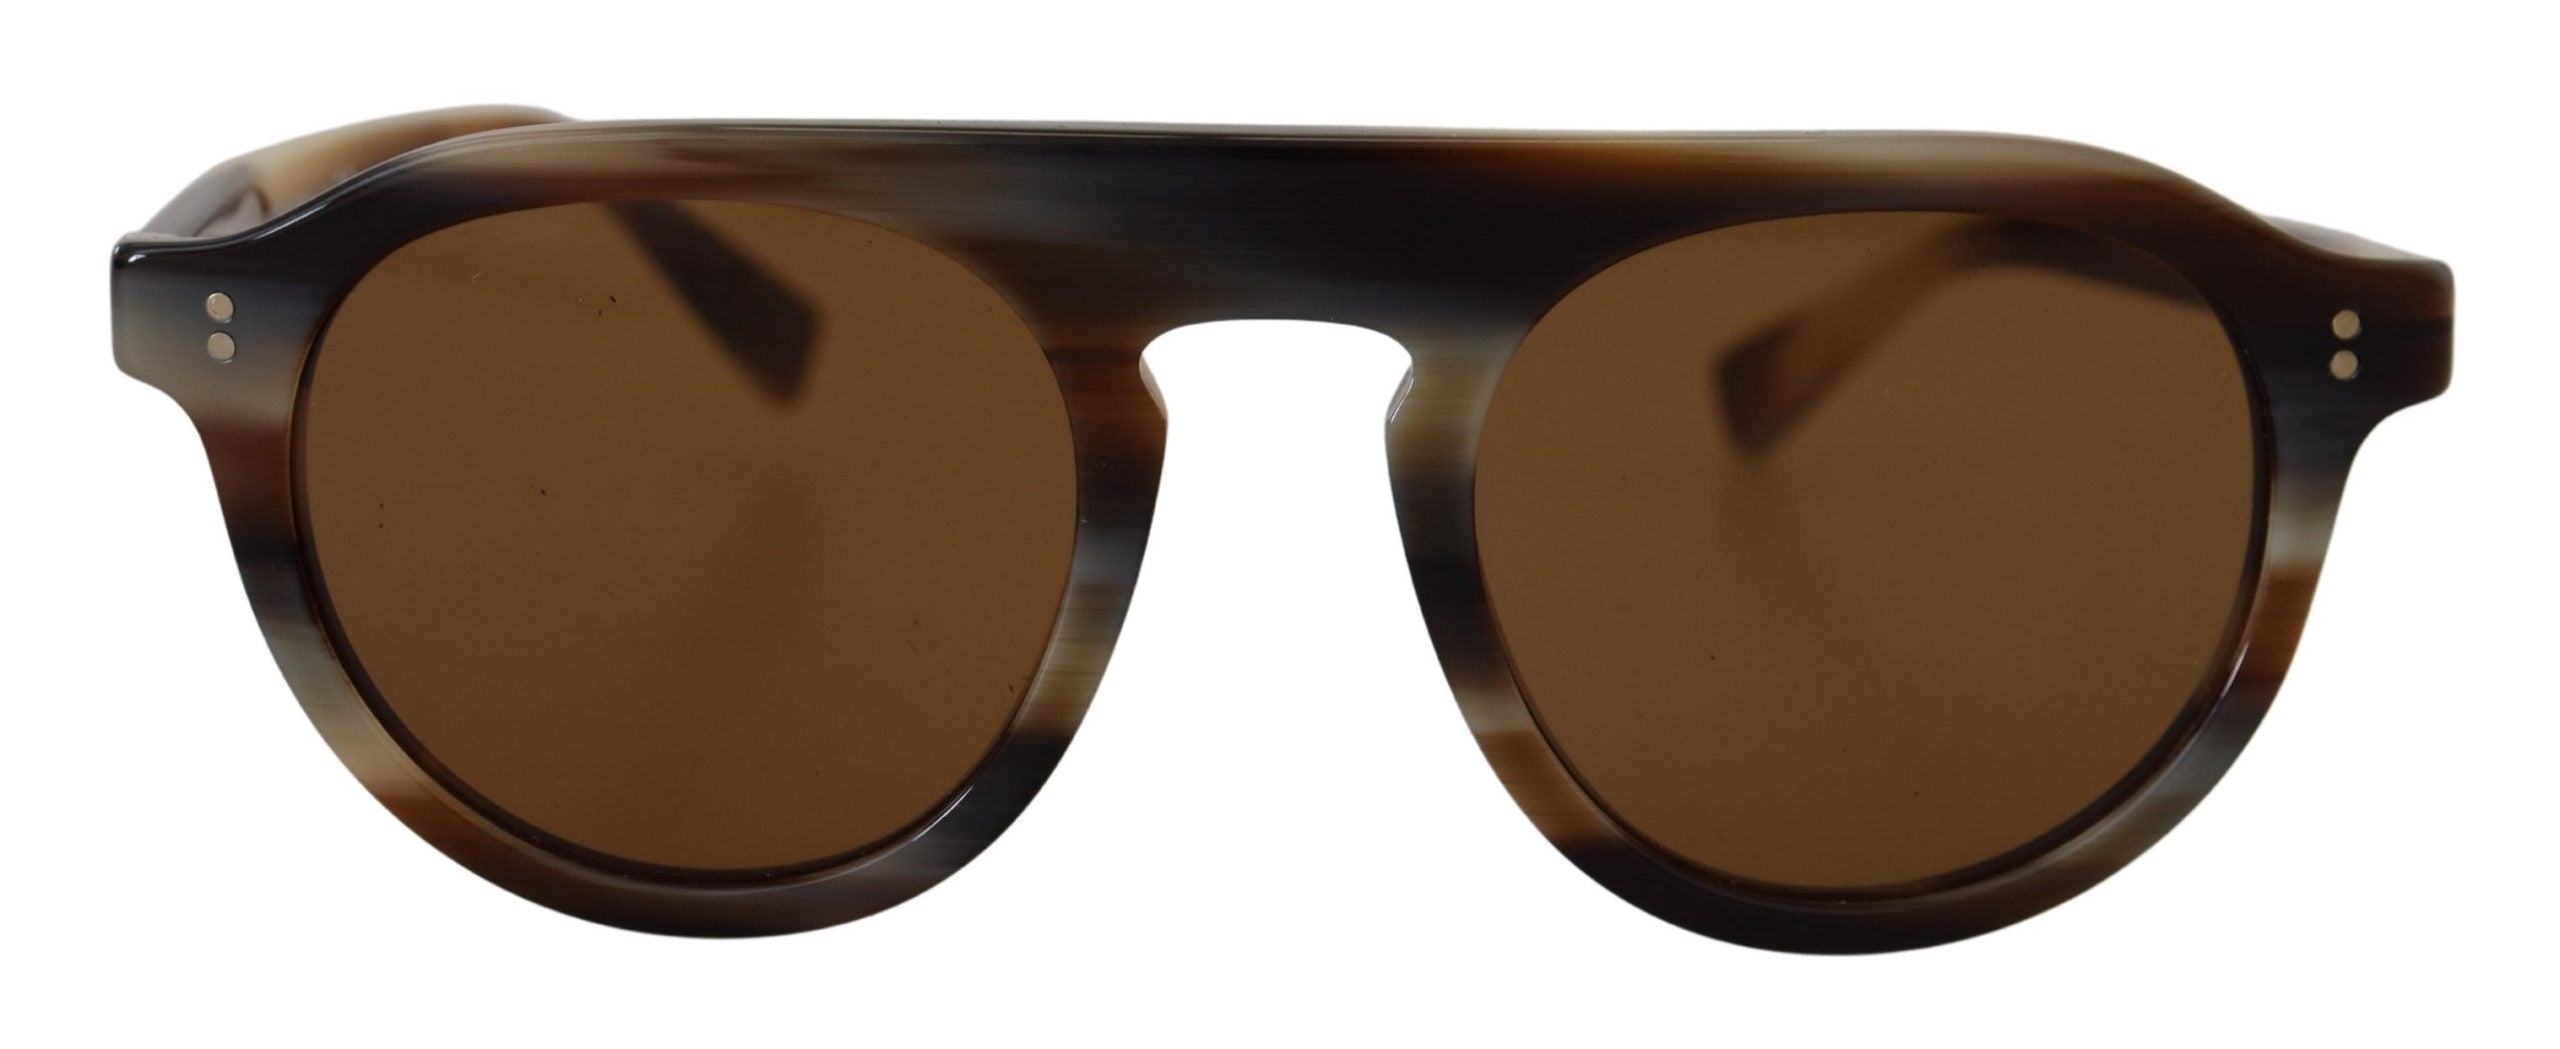 DOLCE & GABBANA Dolce & Gabbana Tortoise Oval Full Rim Eyewear DG4306 Women's Sunglasses